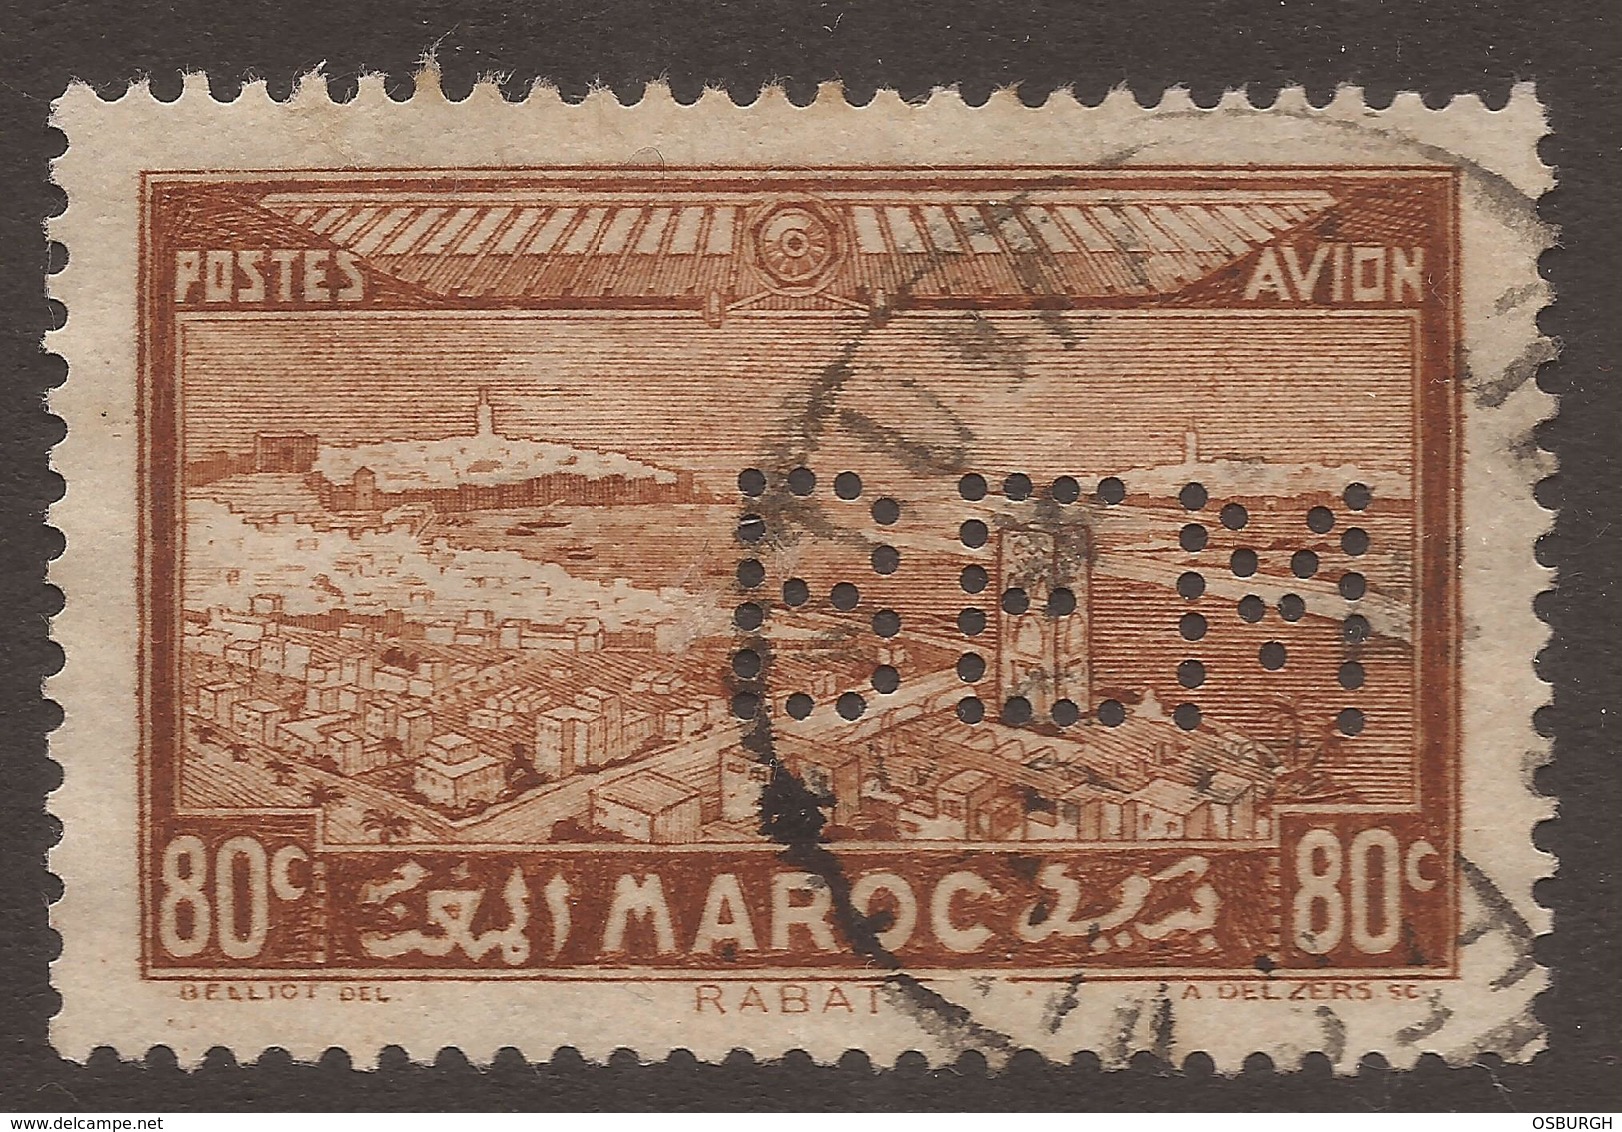 MAROCCO. PERIN BEM. 80c BROWN USED - Morocco (1956-...)